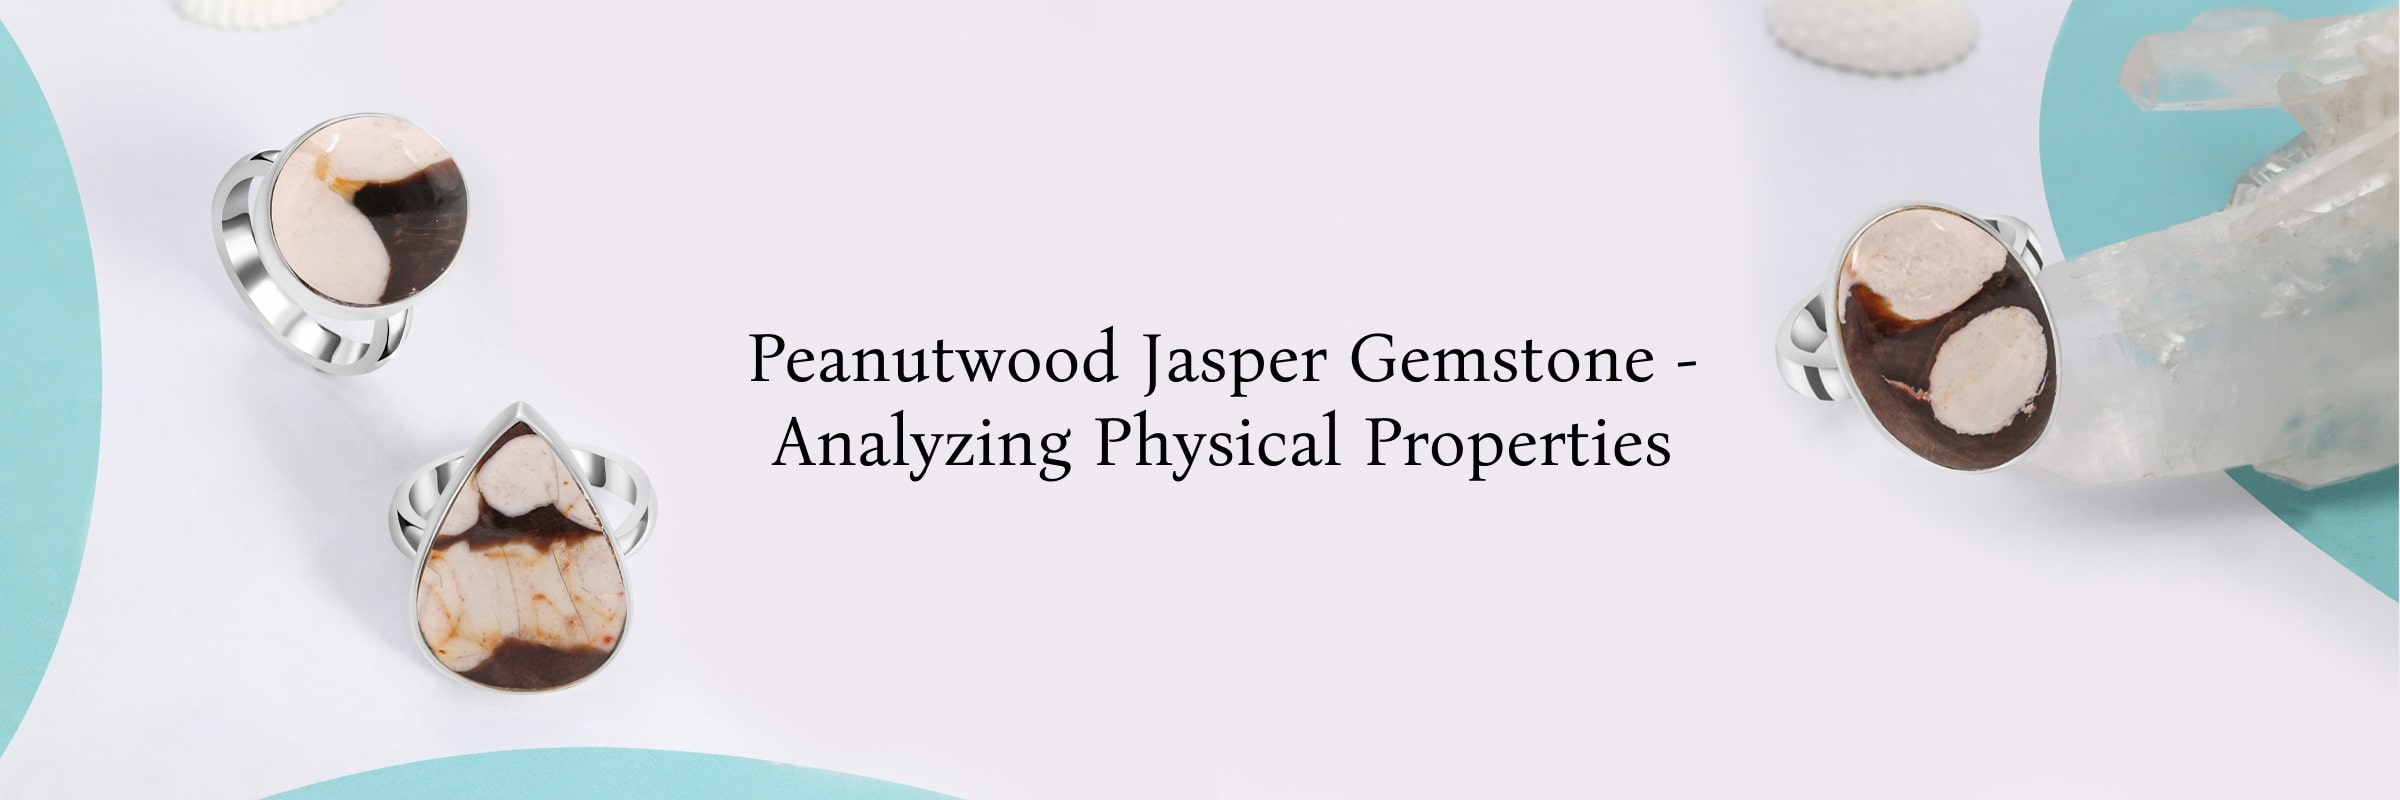 Fun Fact about Peanutwood Jasper Stone